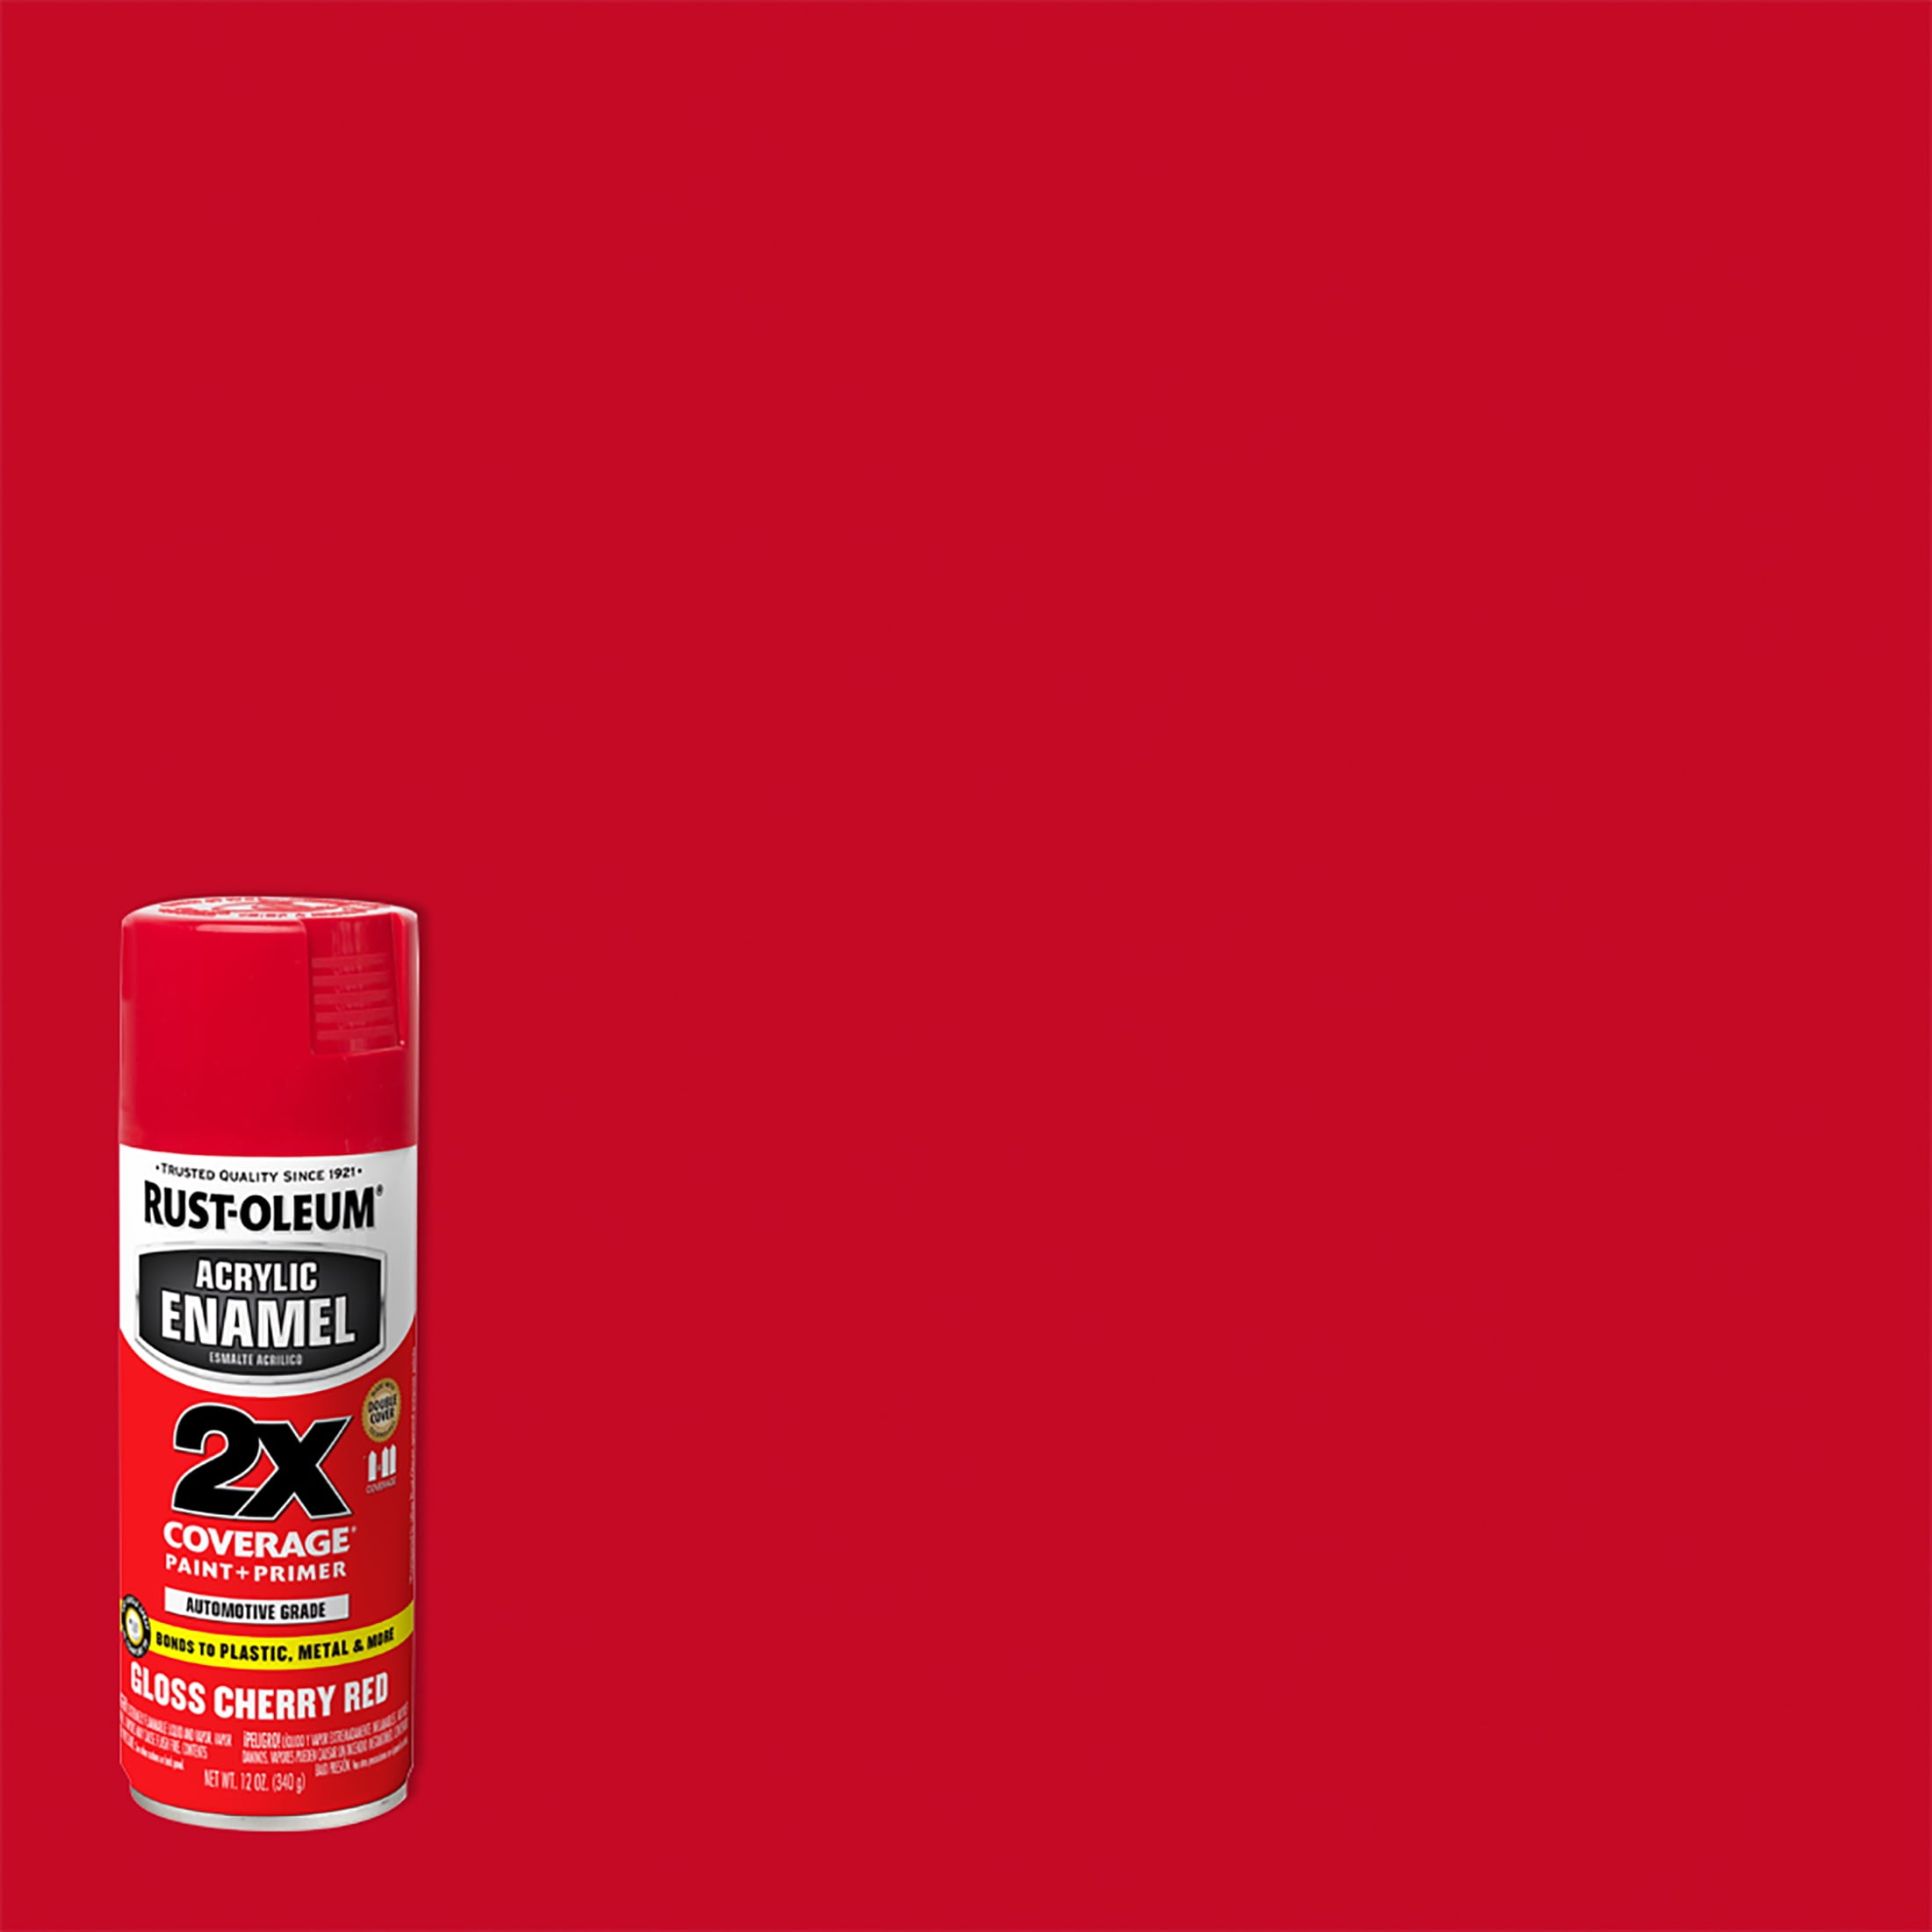 bestikke Objector Pastor Red, Rust-Oleum Automotive Gloss Acrylic Enamel 2X Spray Paint-271920, 12  oz - Walmart.com